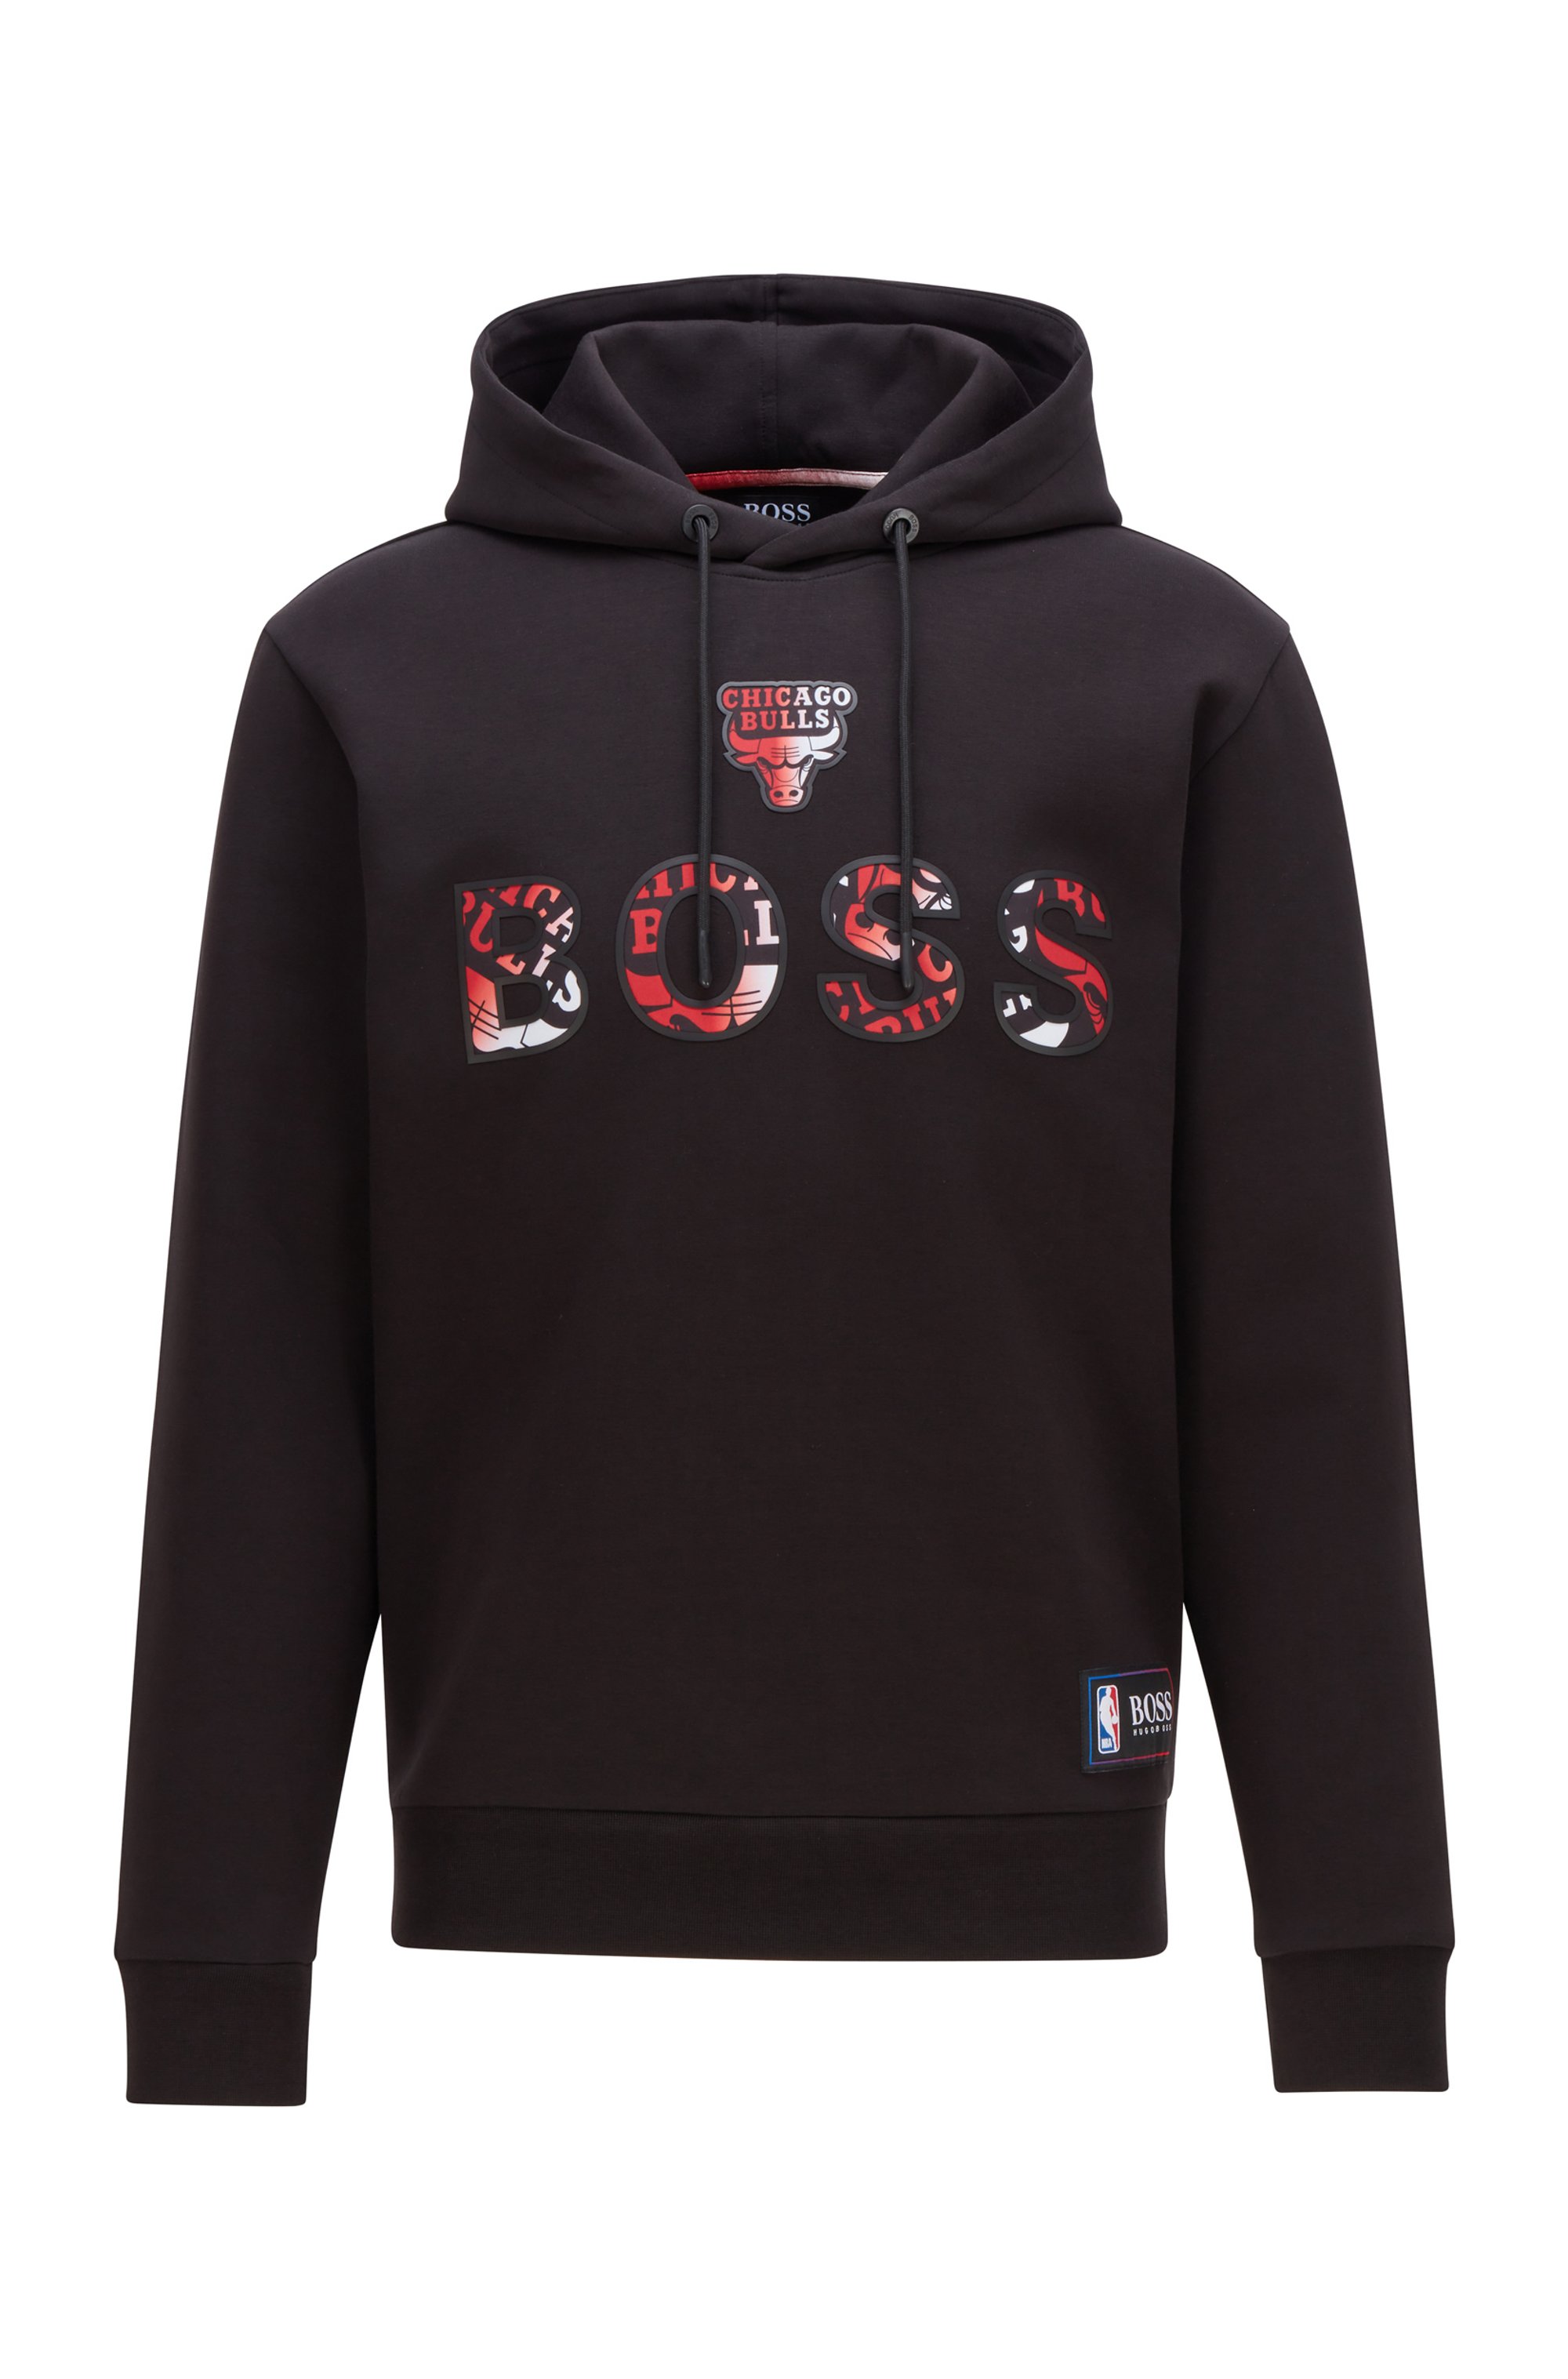 BOSS x NBA cotton-blend hoodie with colorful branding, NBA Bulls